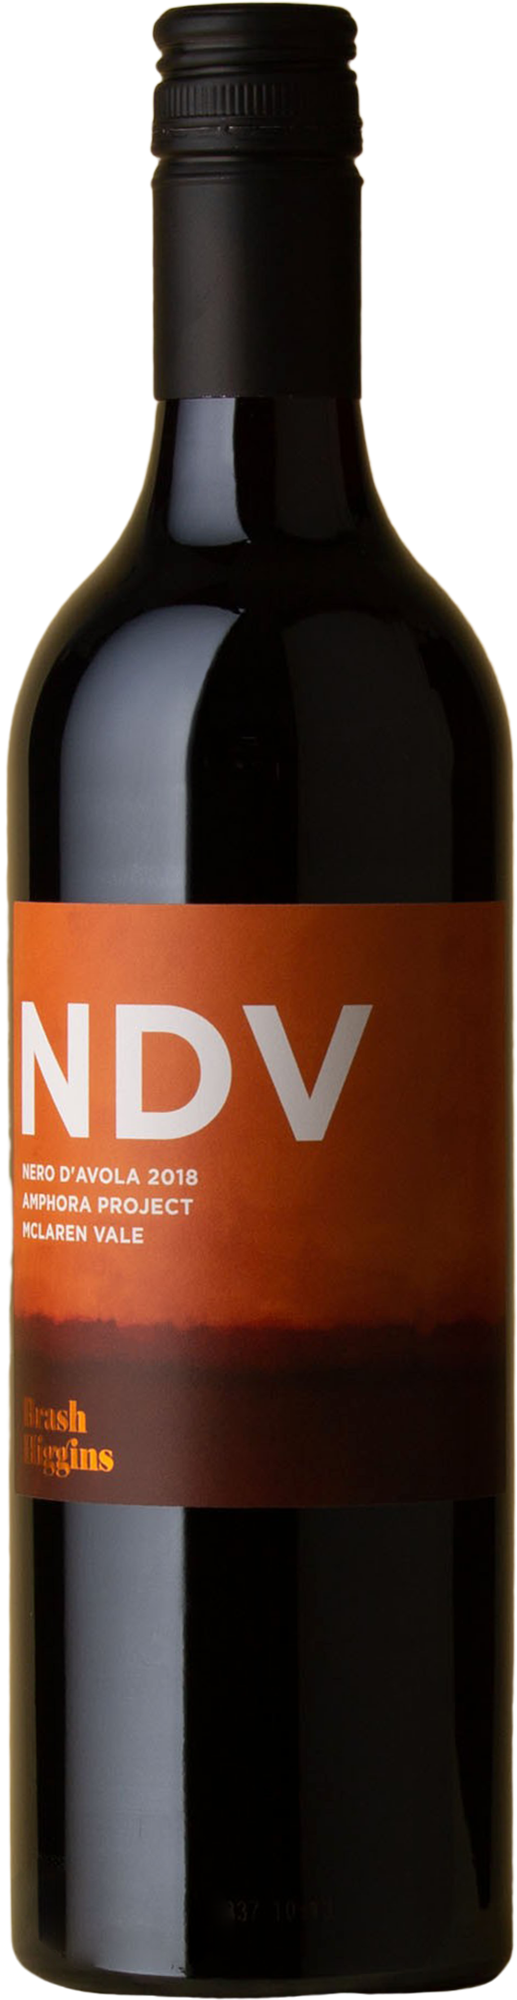 Brash Higgins - NDV Nero d’Avola 2018 Red Wine